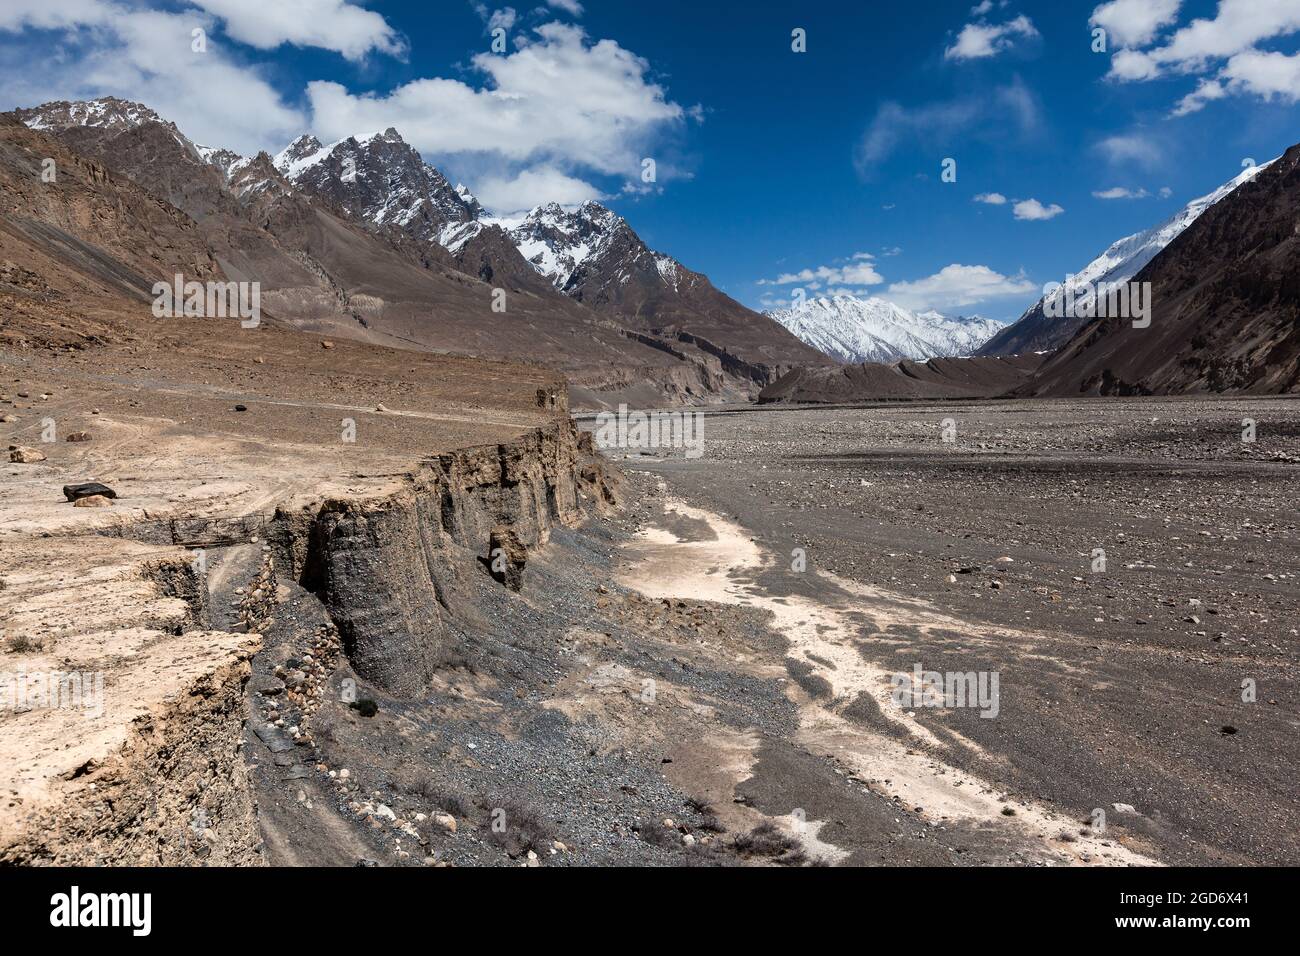 Remote Shimshal valley in Karakorum mountains Stock Photo